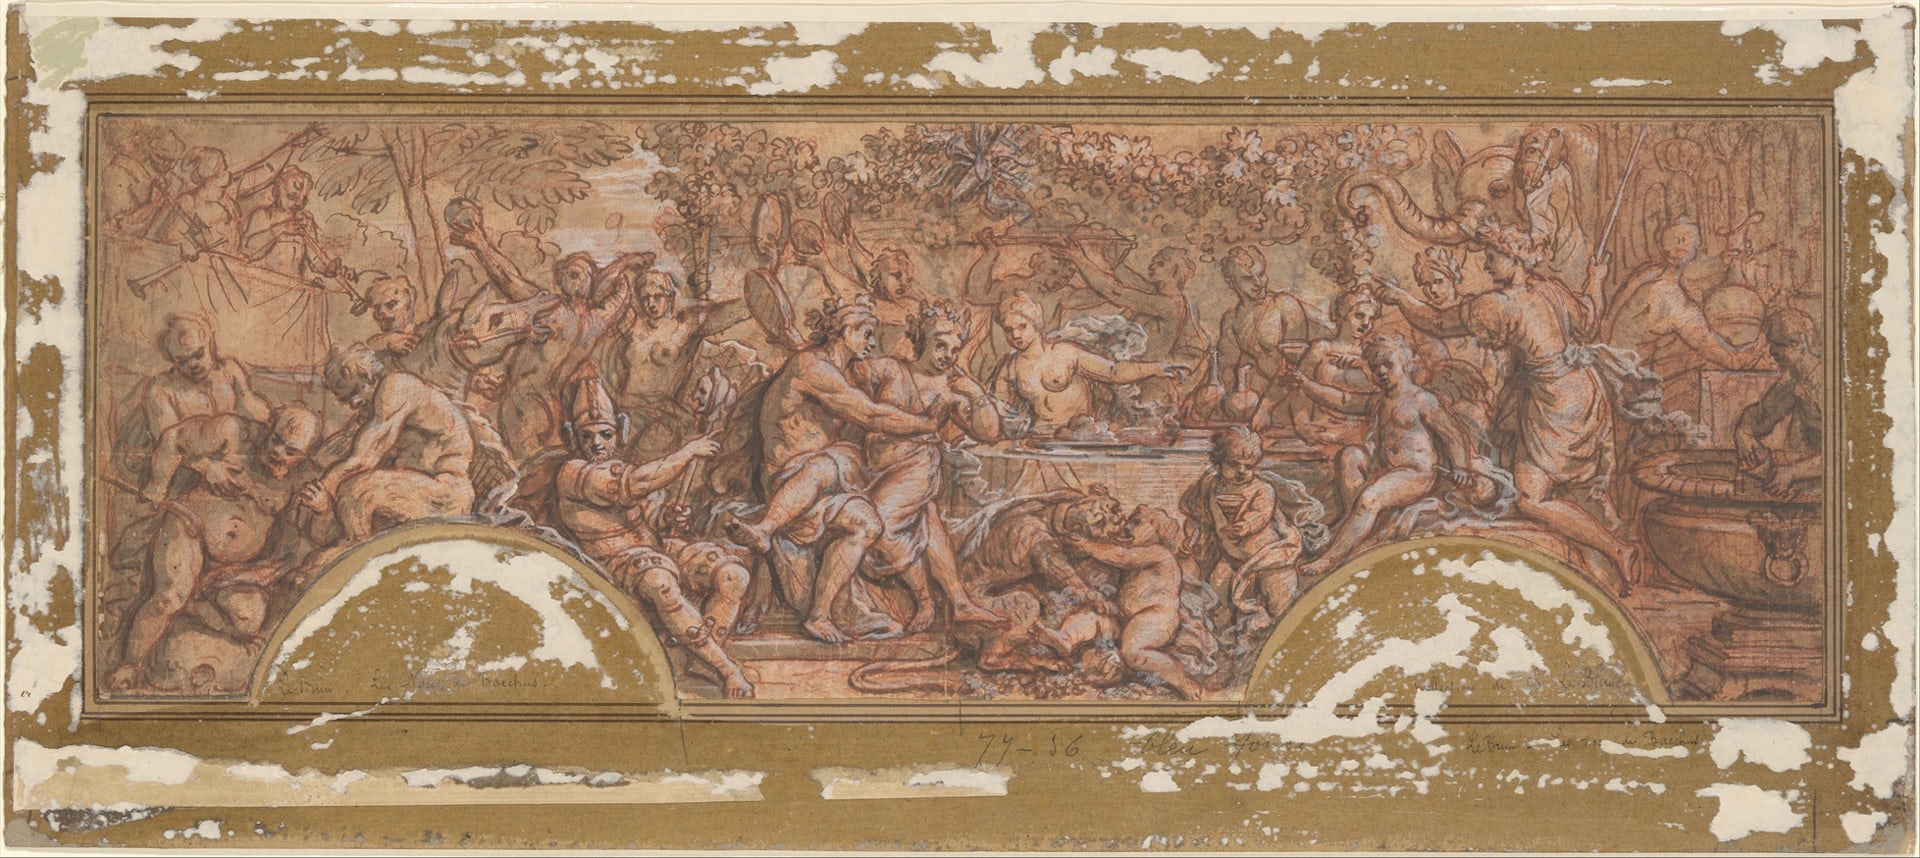 The Wedding of Bacchus and Ariadne by Guy Louis Vernansal the Elder